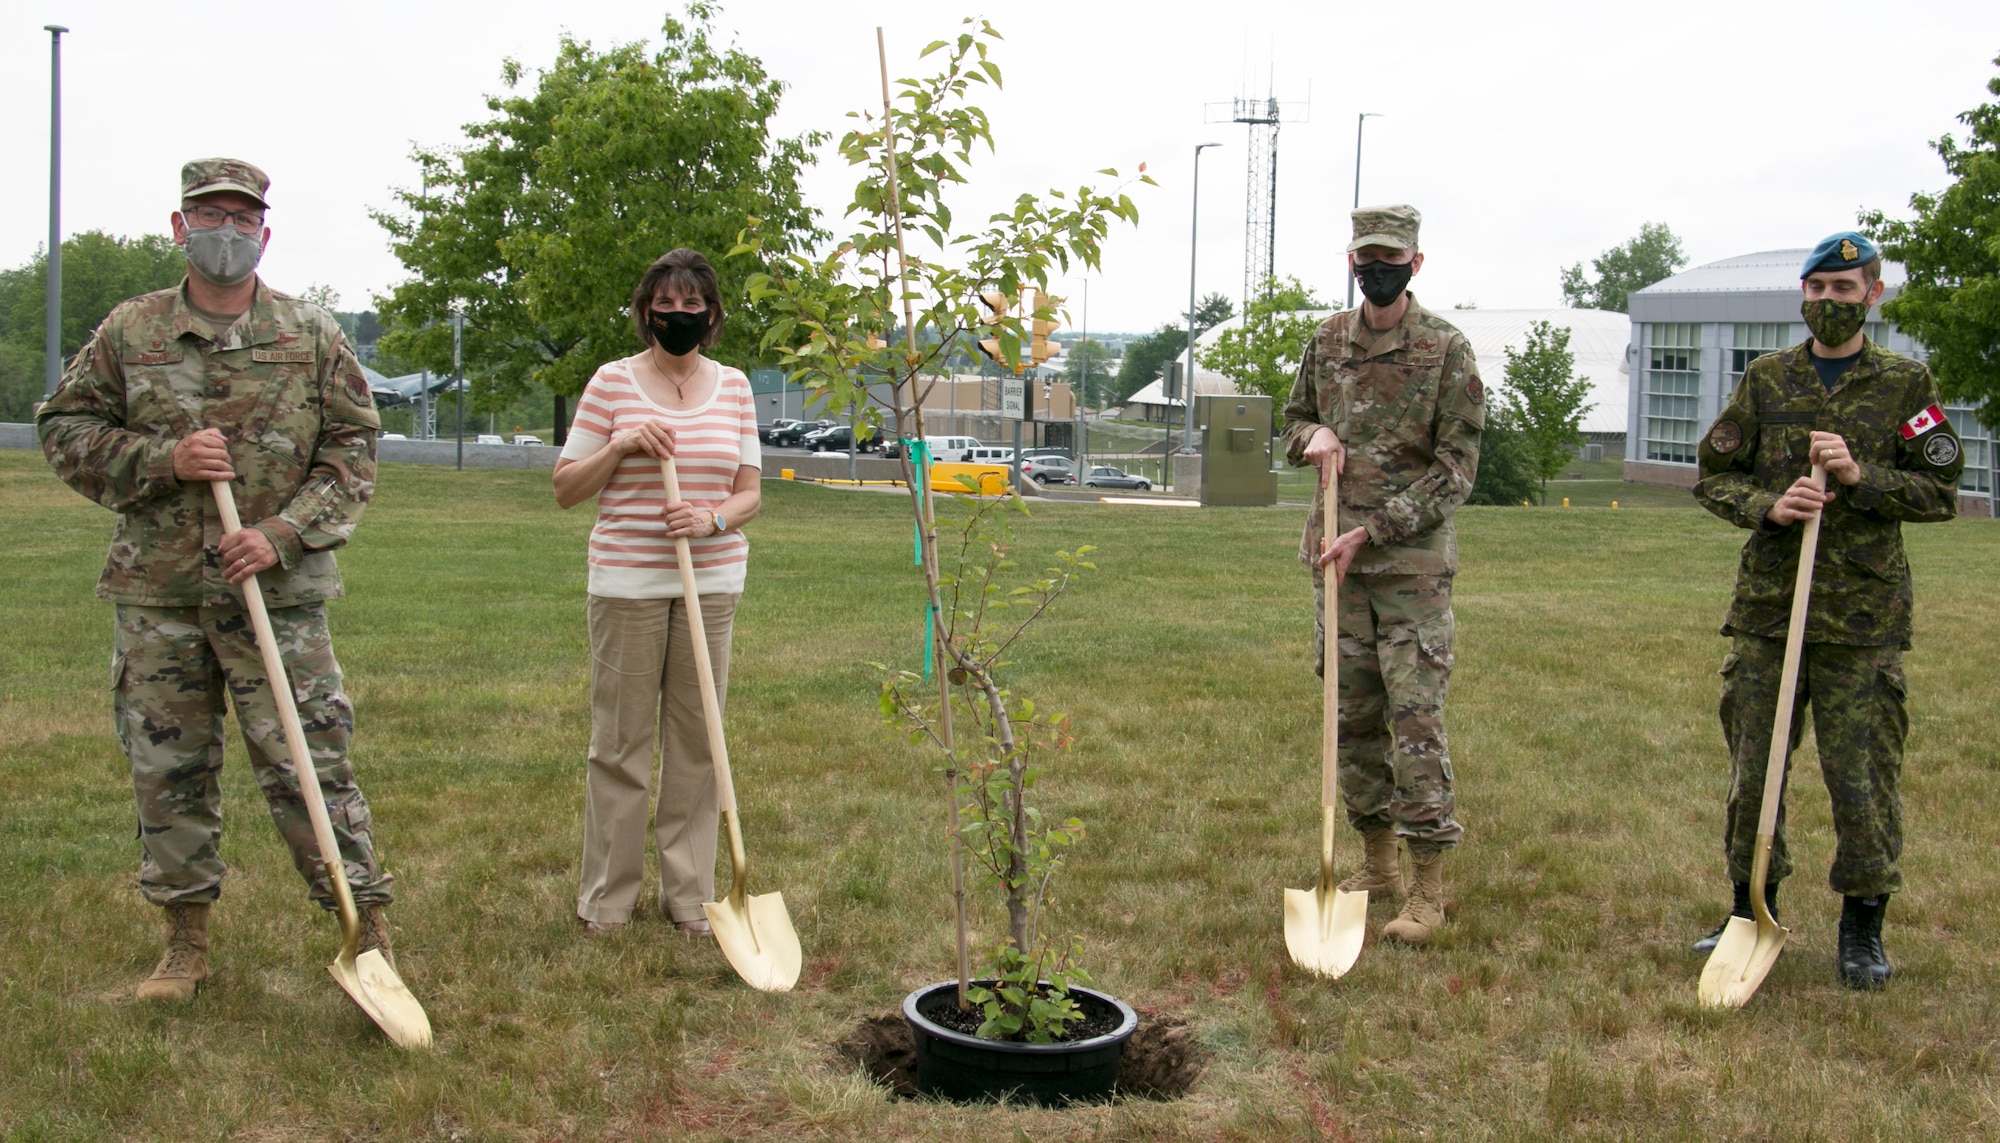 9/11 Survivor Tree seedling planted at EADS